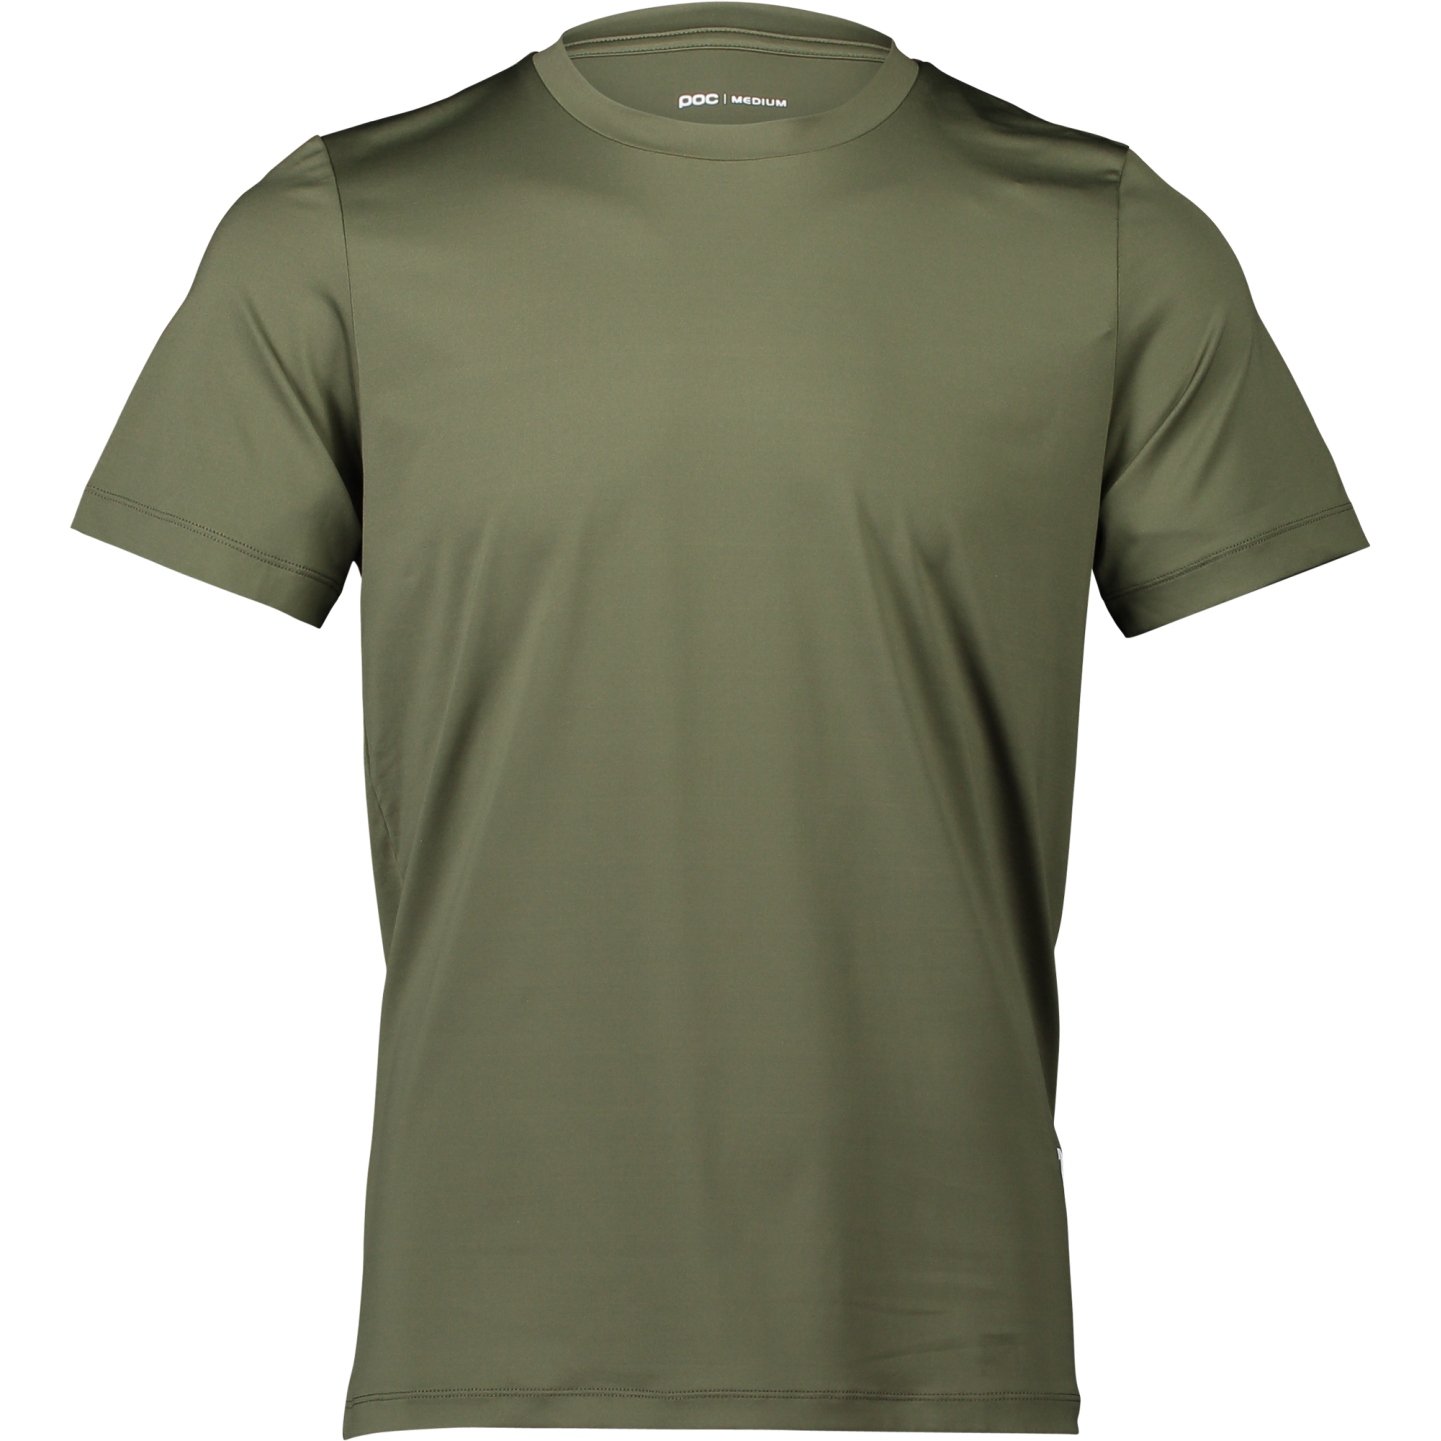 Productfoto van POC Reform Enduro Light T-Shirt Heren - 1460 Epidote Green